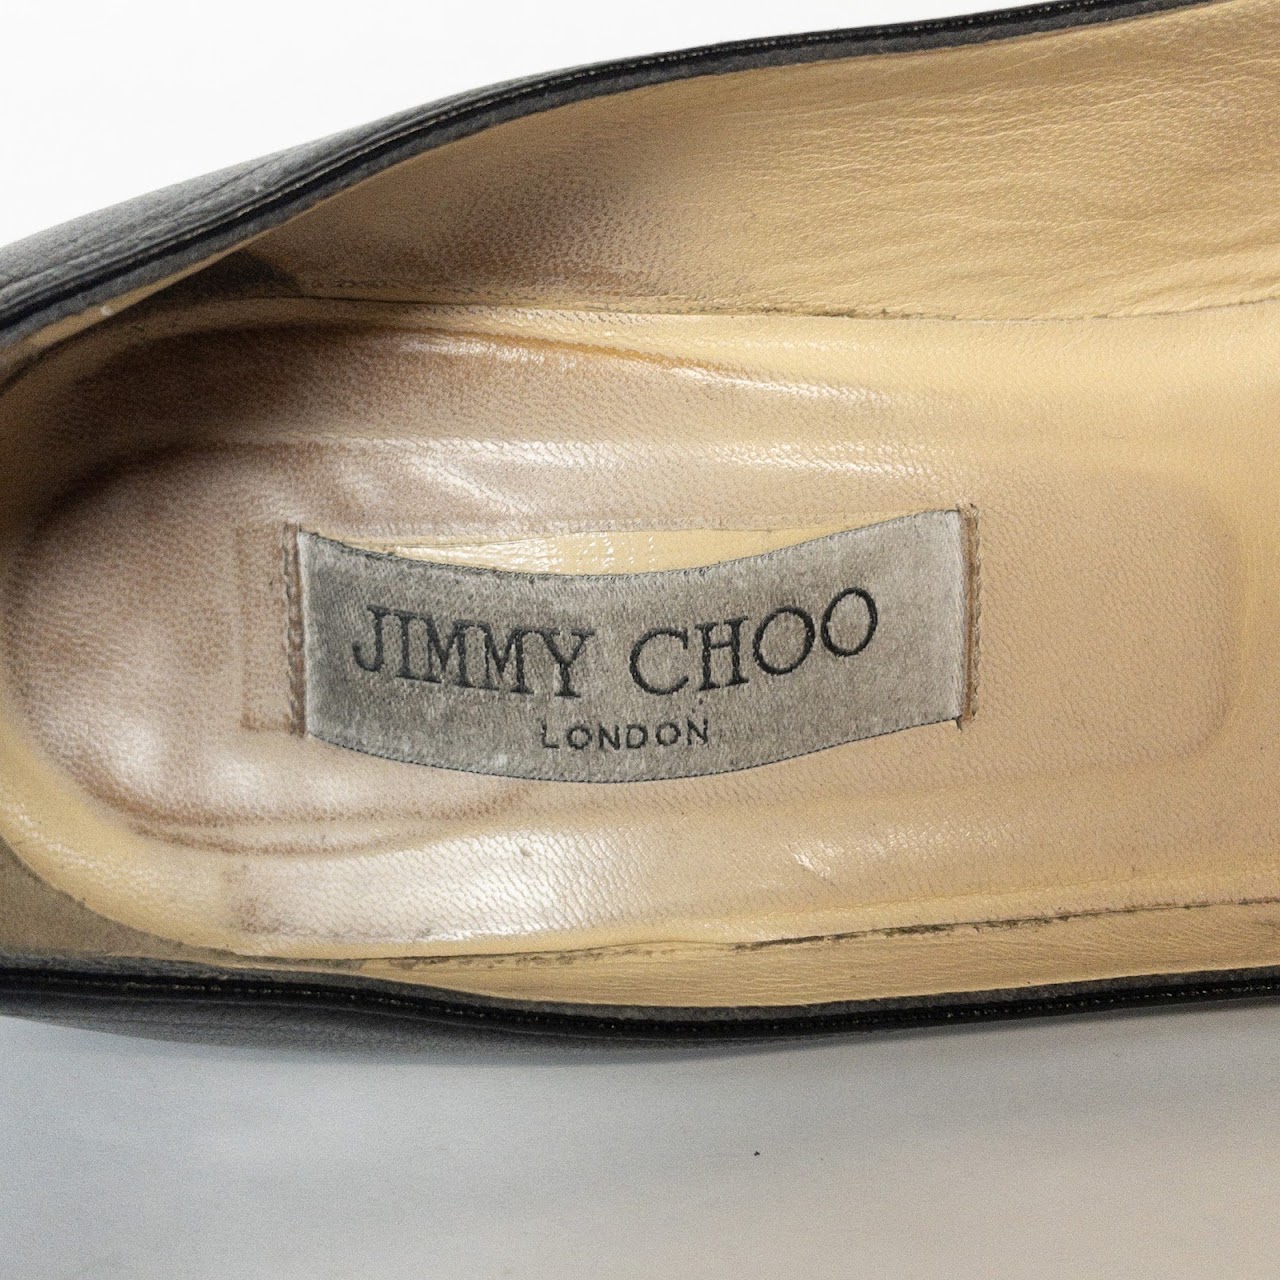 Jimmy Choo Black Leather Pumps